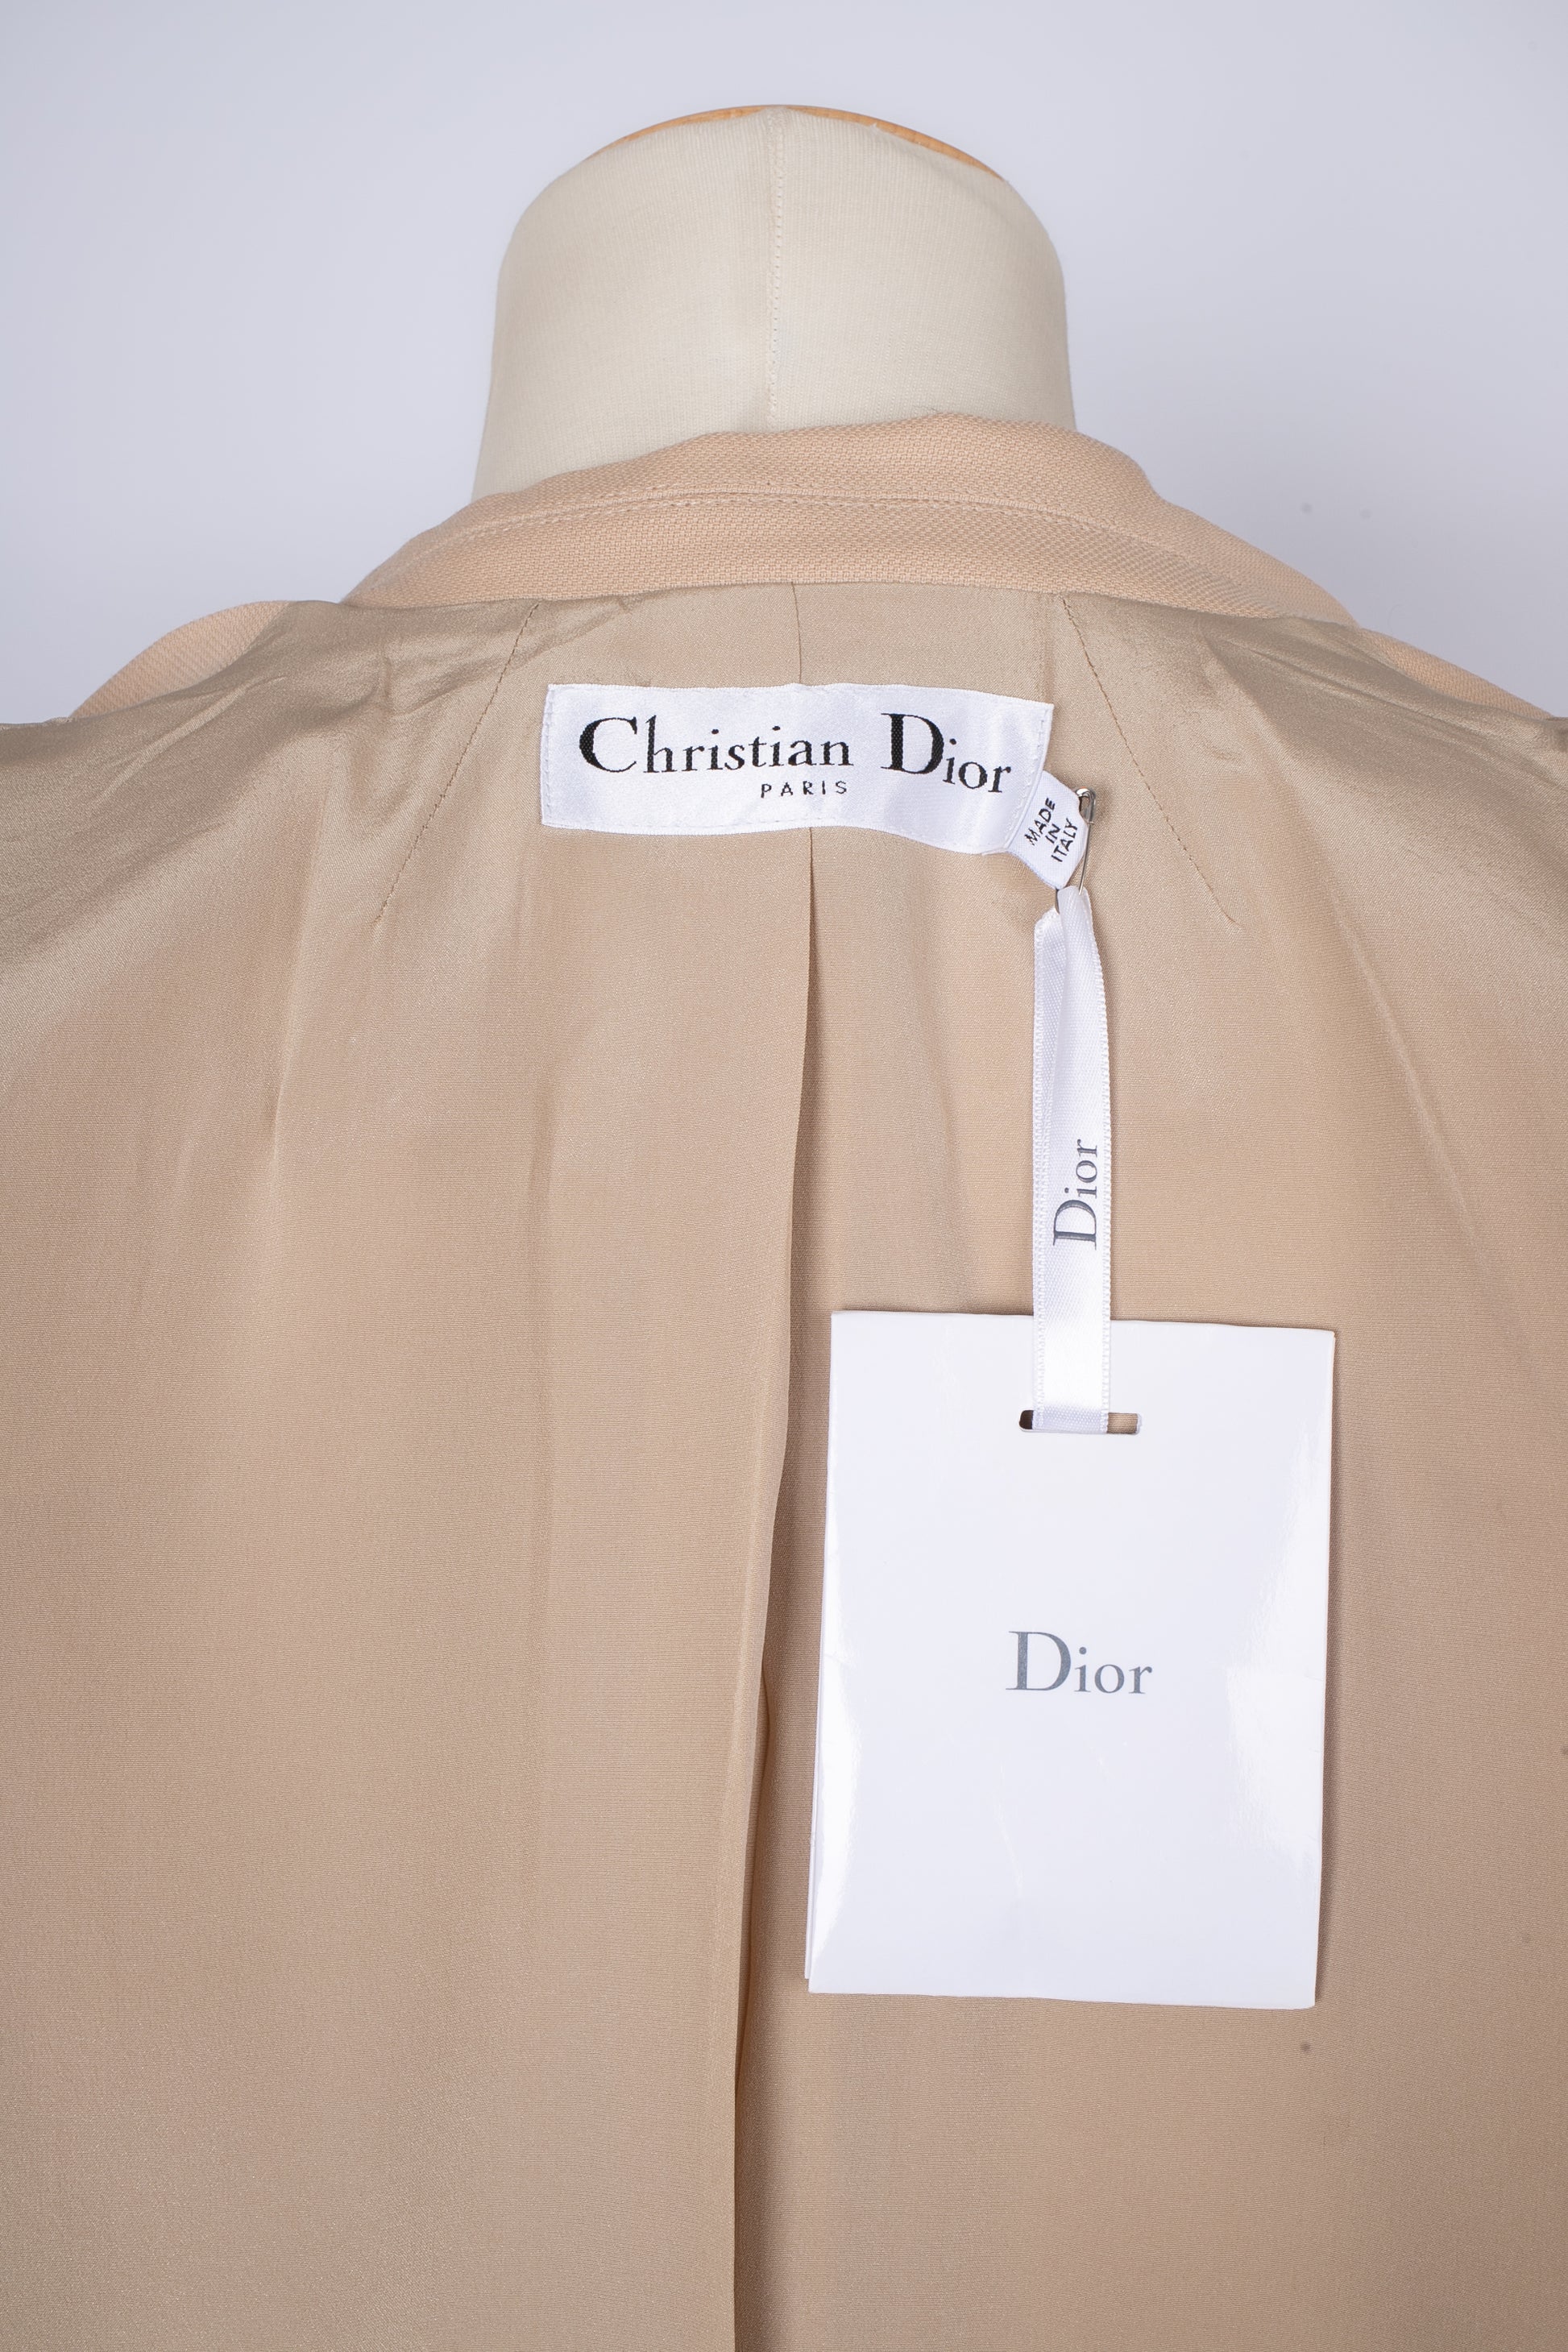 Veste Christian Dior 2017